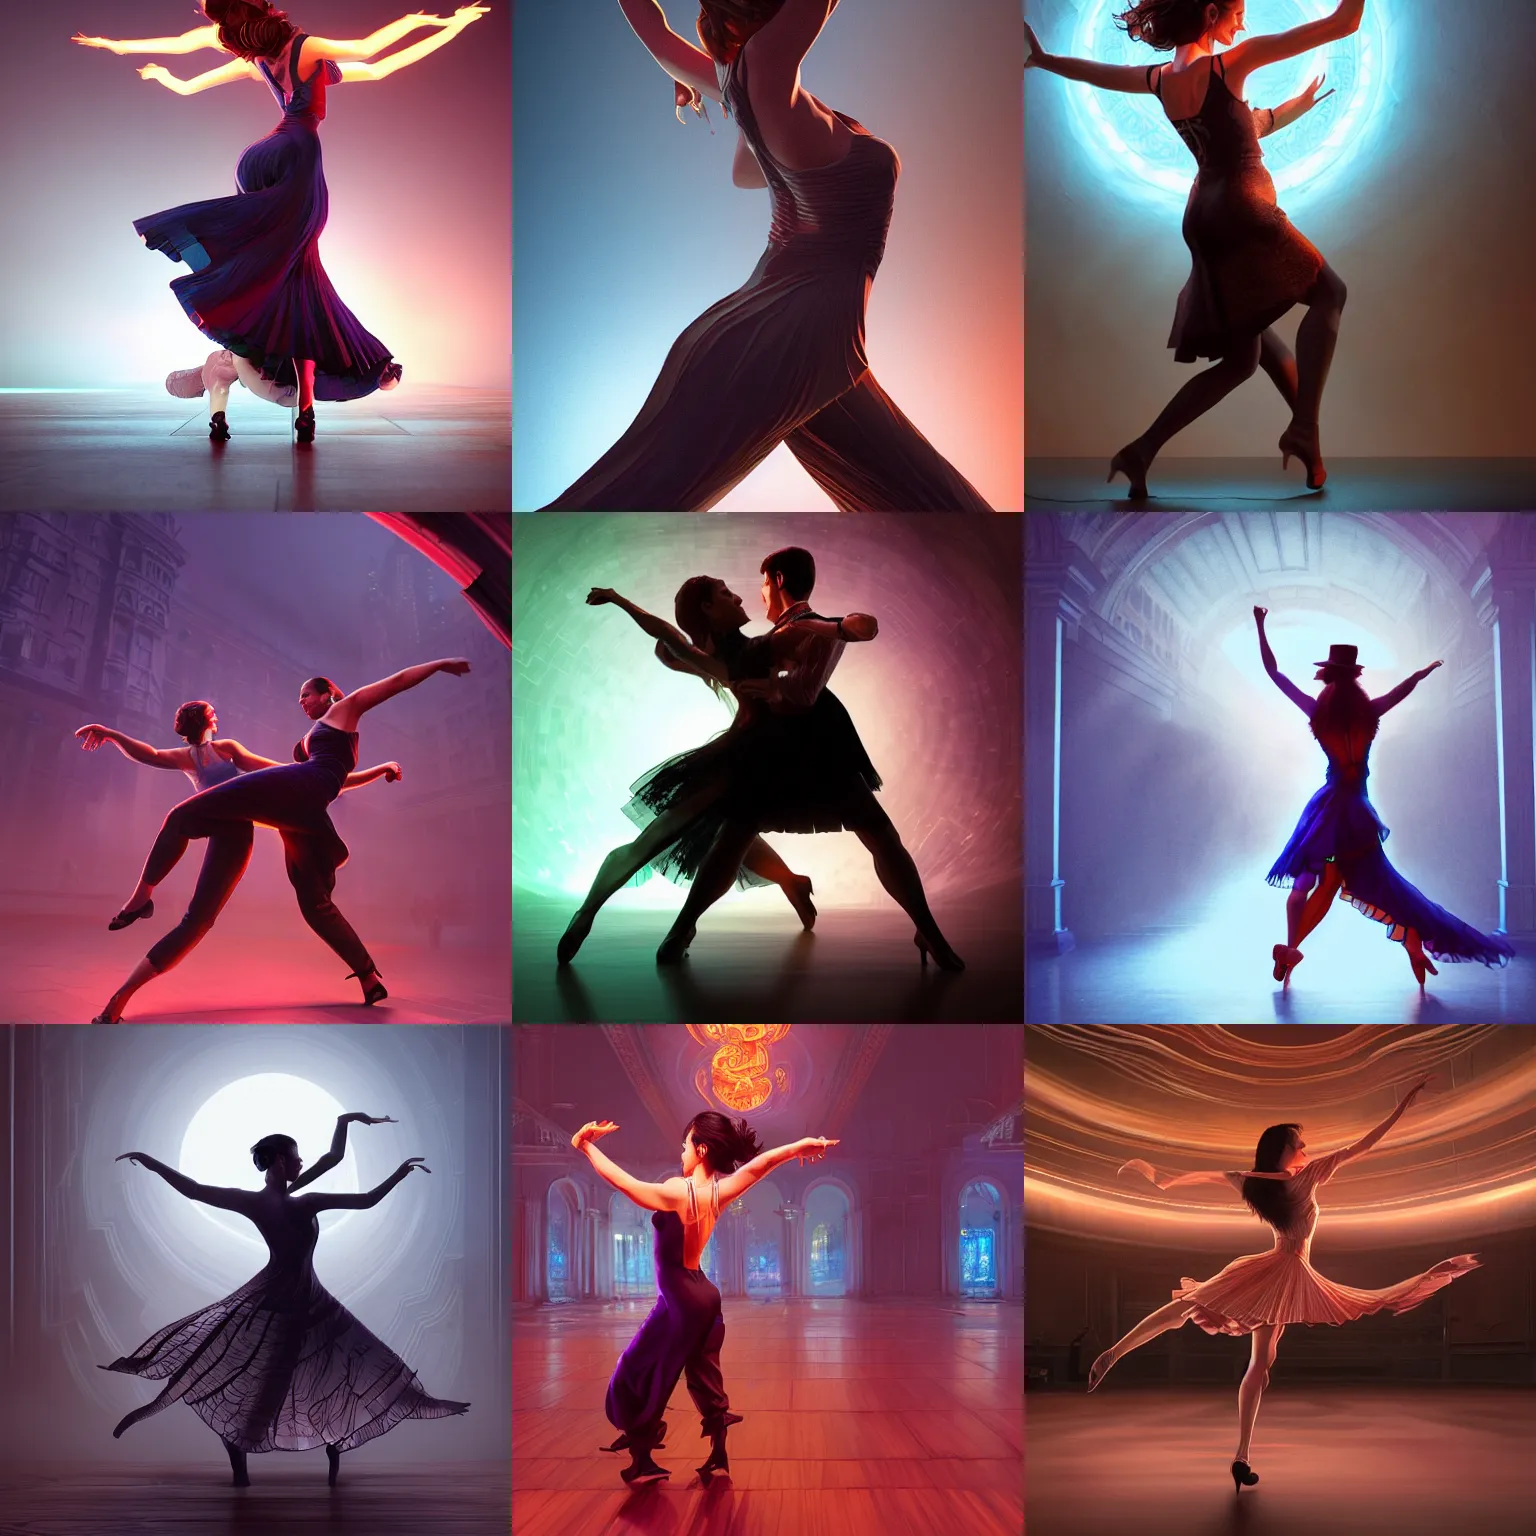 Prompt: a woman dancing tango, symmetrical, intricate, epic lighting, cinematic composition, hyper realistic, 8 k resolution, unreal engine 5, by artgerm, tooth wu, dan mumford, beeple, wlop, rossdraws, james jean, marc simonetti, artstation